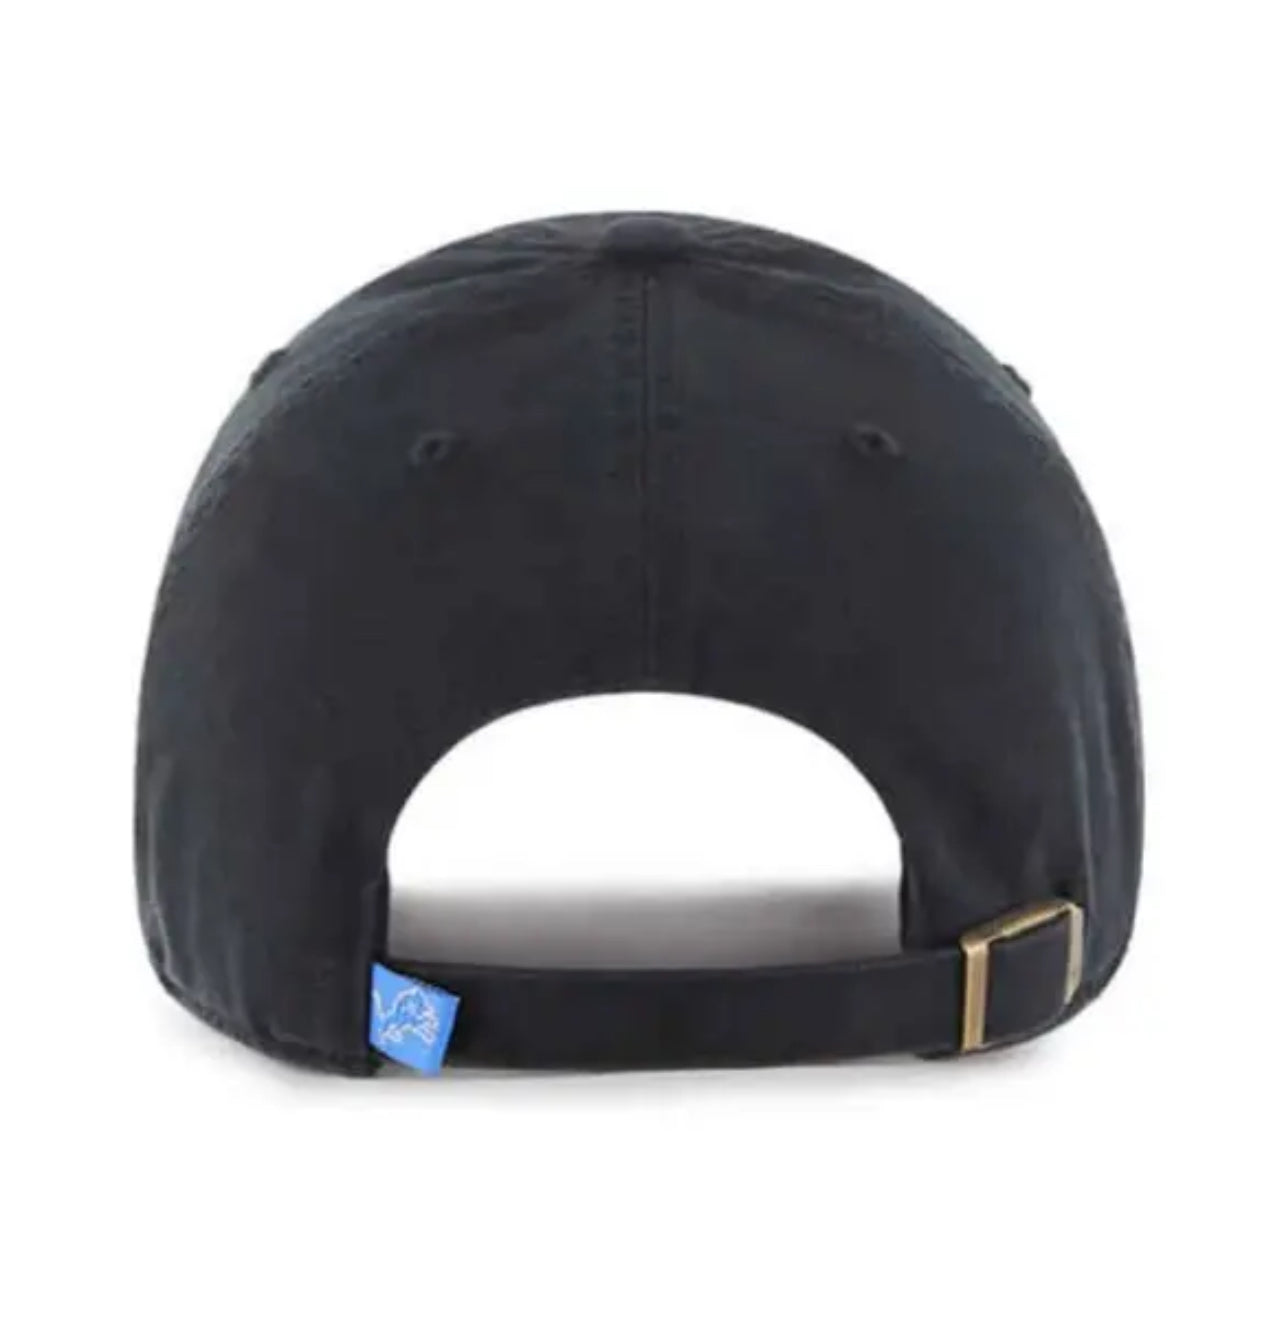 Detroit Lions '47 Brand Black Clean Up Adjustable Dad Hat